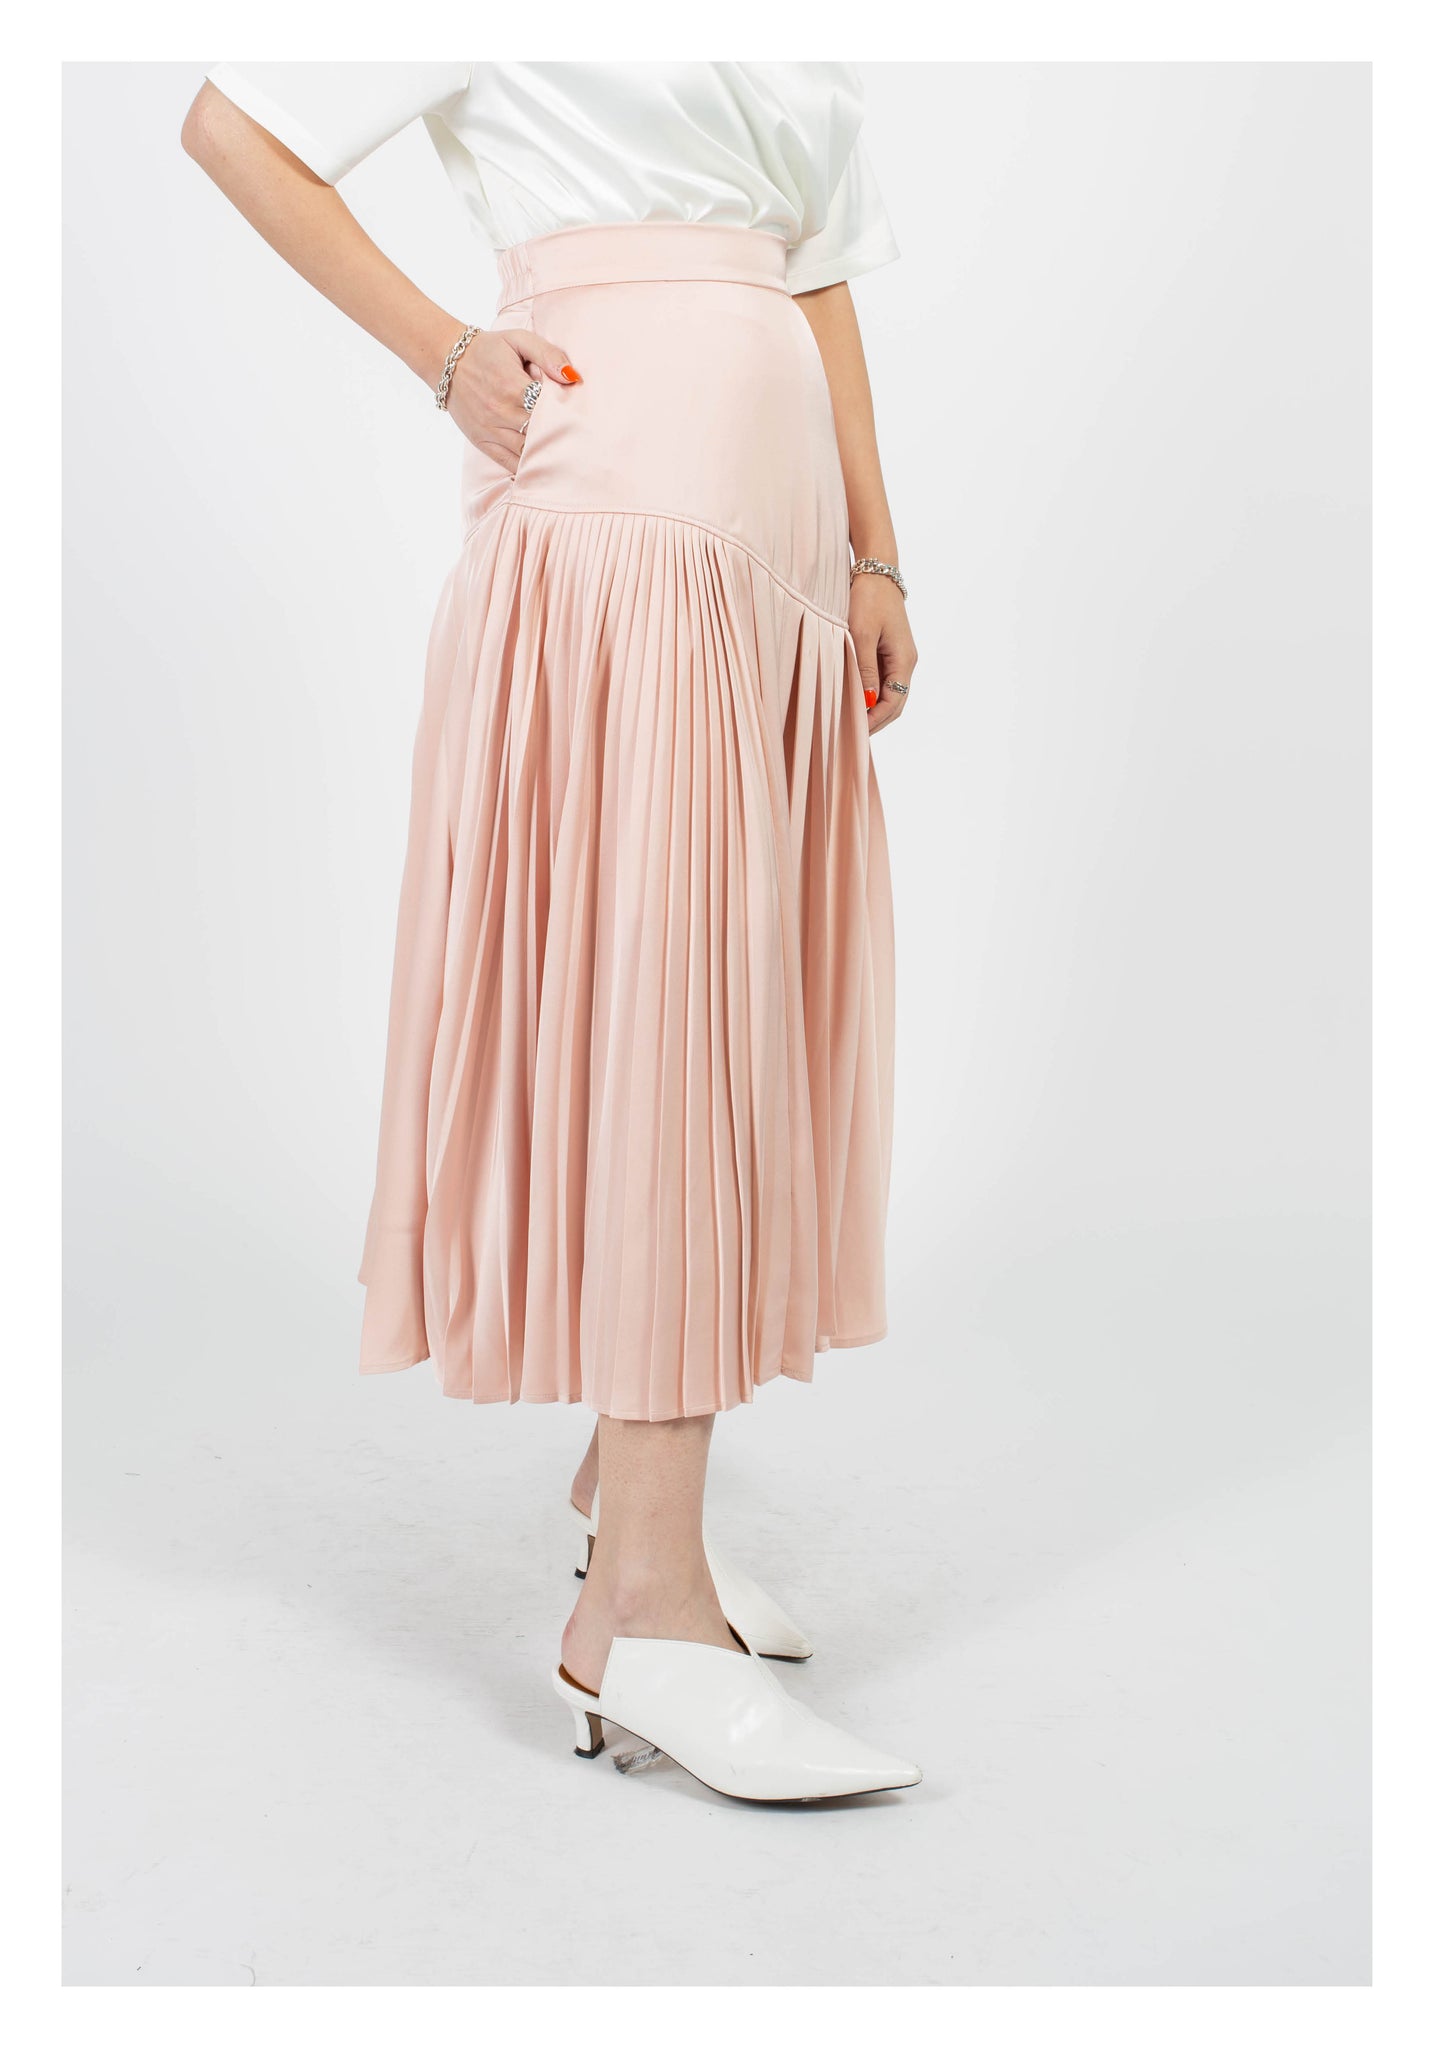 Mixed Pleats Drape Skirt Pink